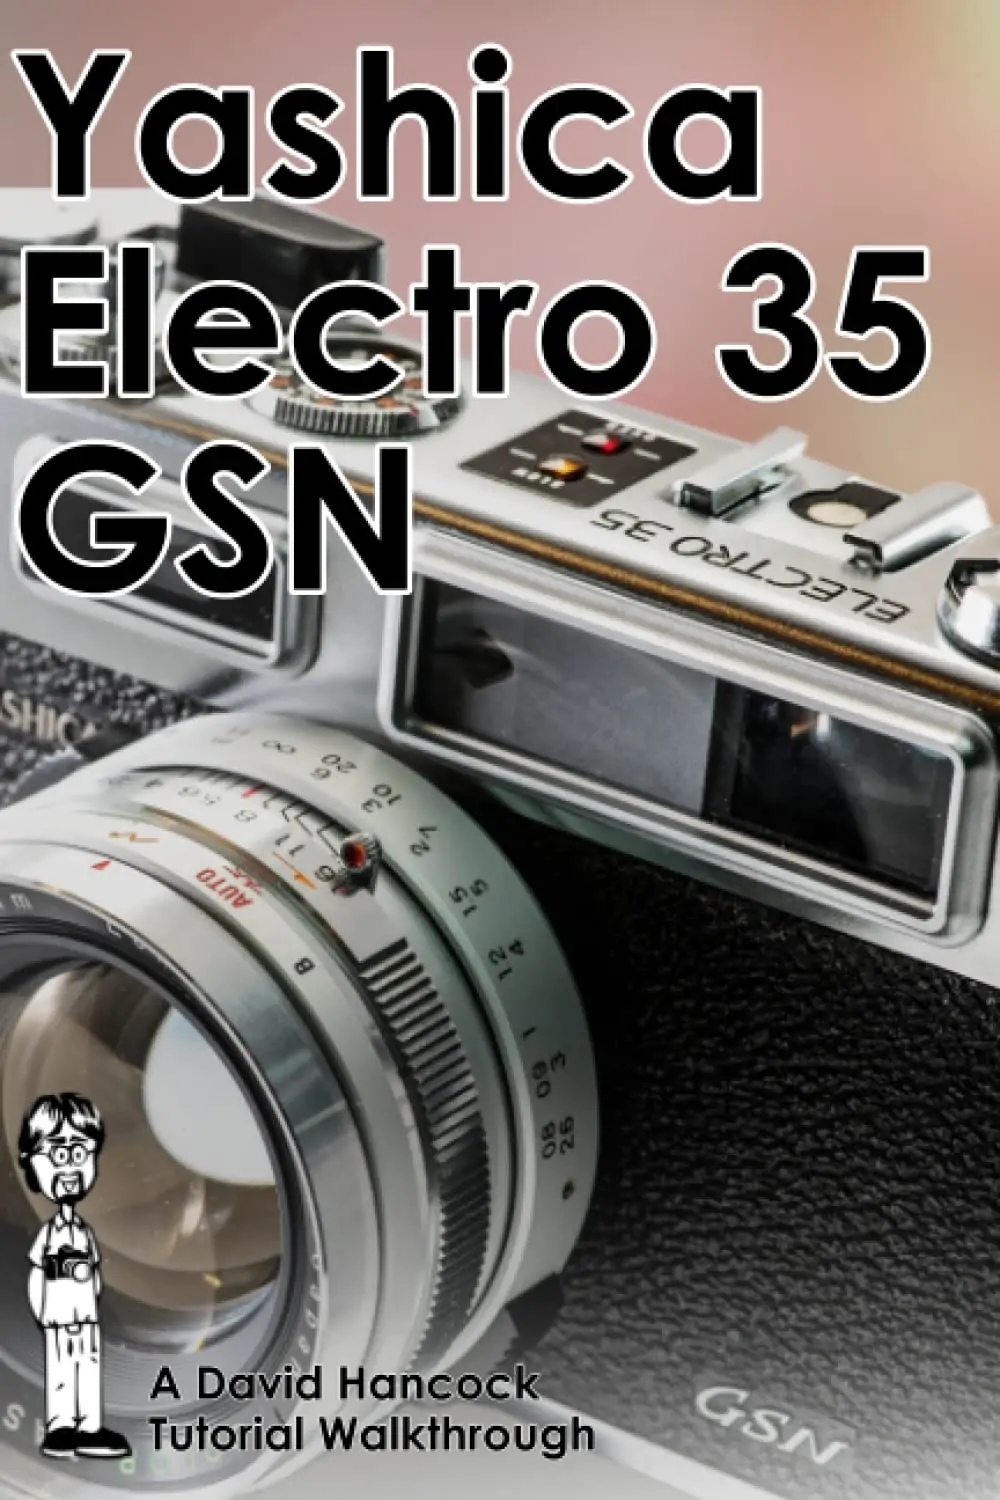 Yashica Electro 35 GSN & GTN 35mm Rangefinder Camera Tutorial Walkthrough